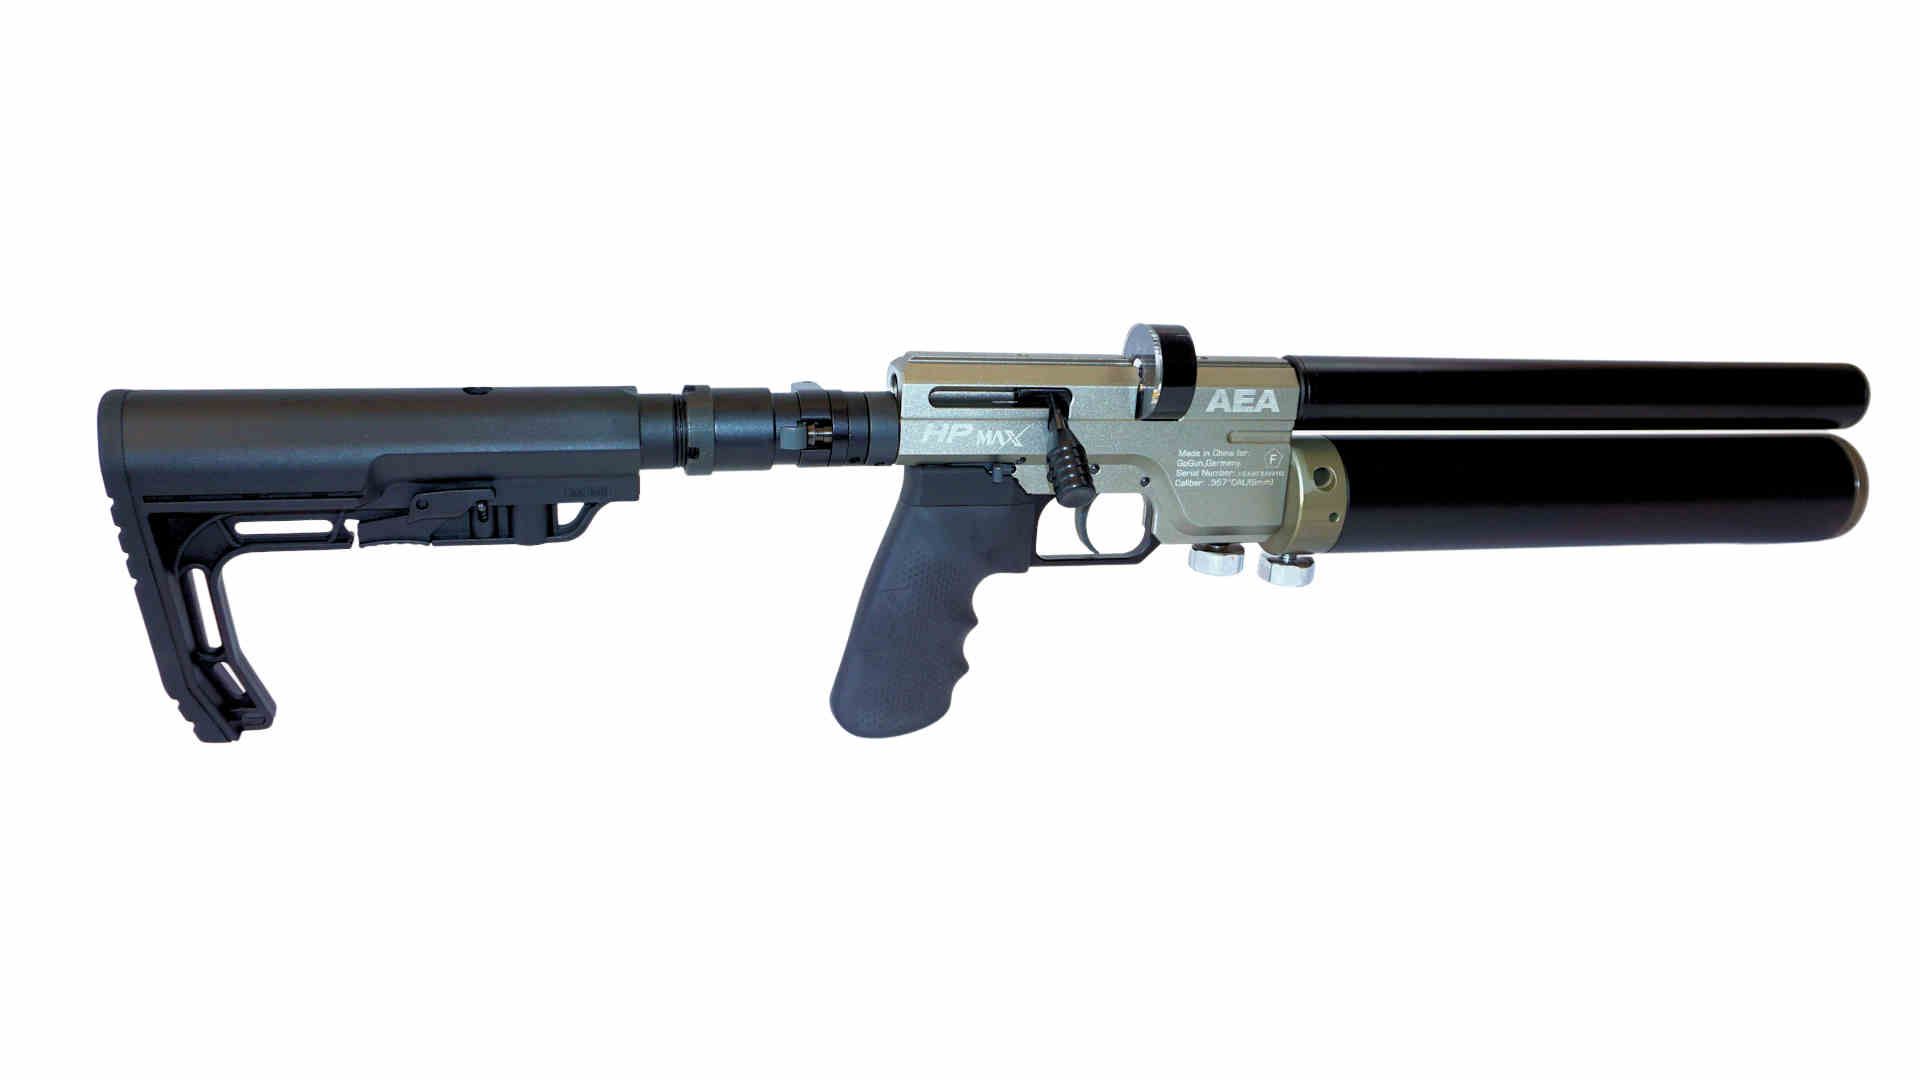 Airgun HPMAX F-Serie luftgewehr 9mm